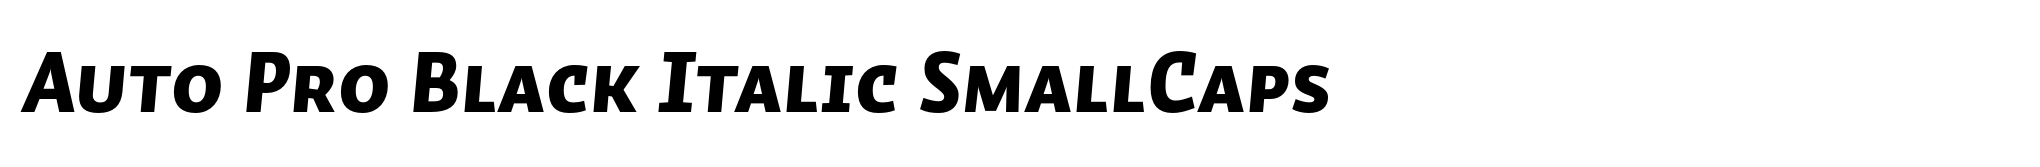 Auto Pro Black Italic SmallCaps image